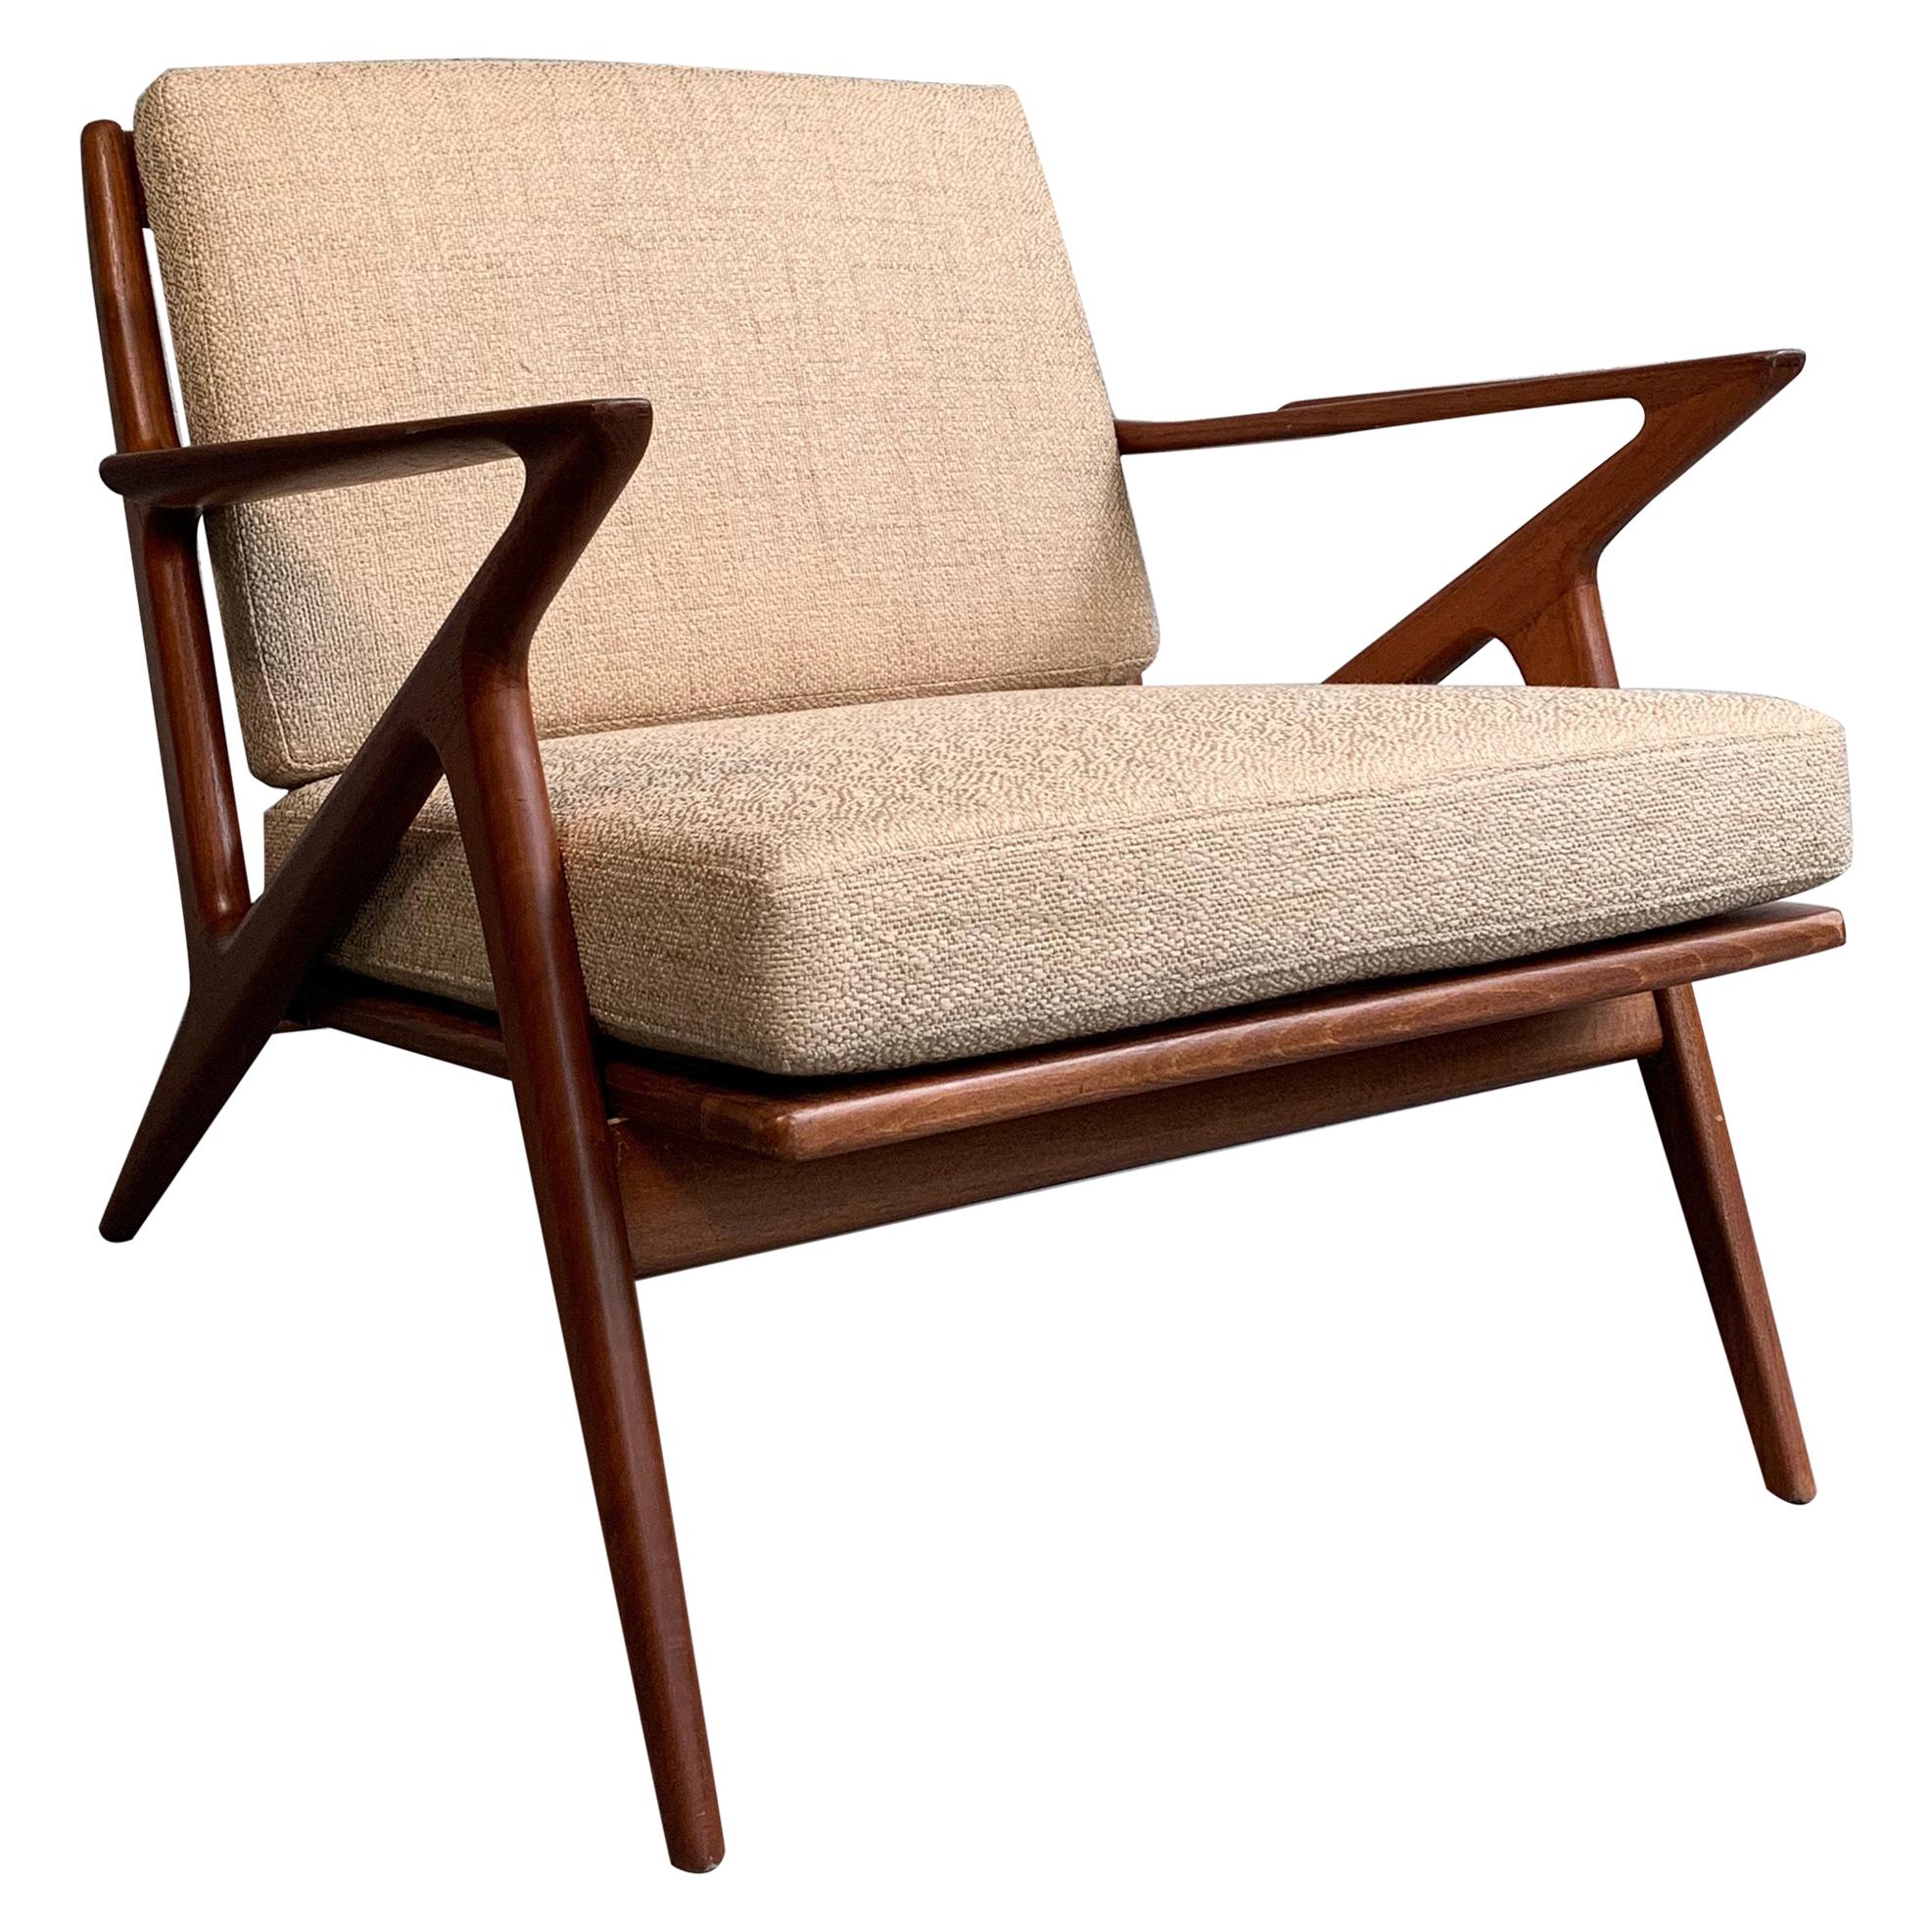 Scandinavian Modern Z Lounge Chair Designed by Poul Jensen